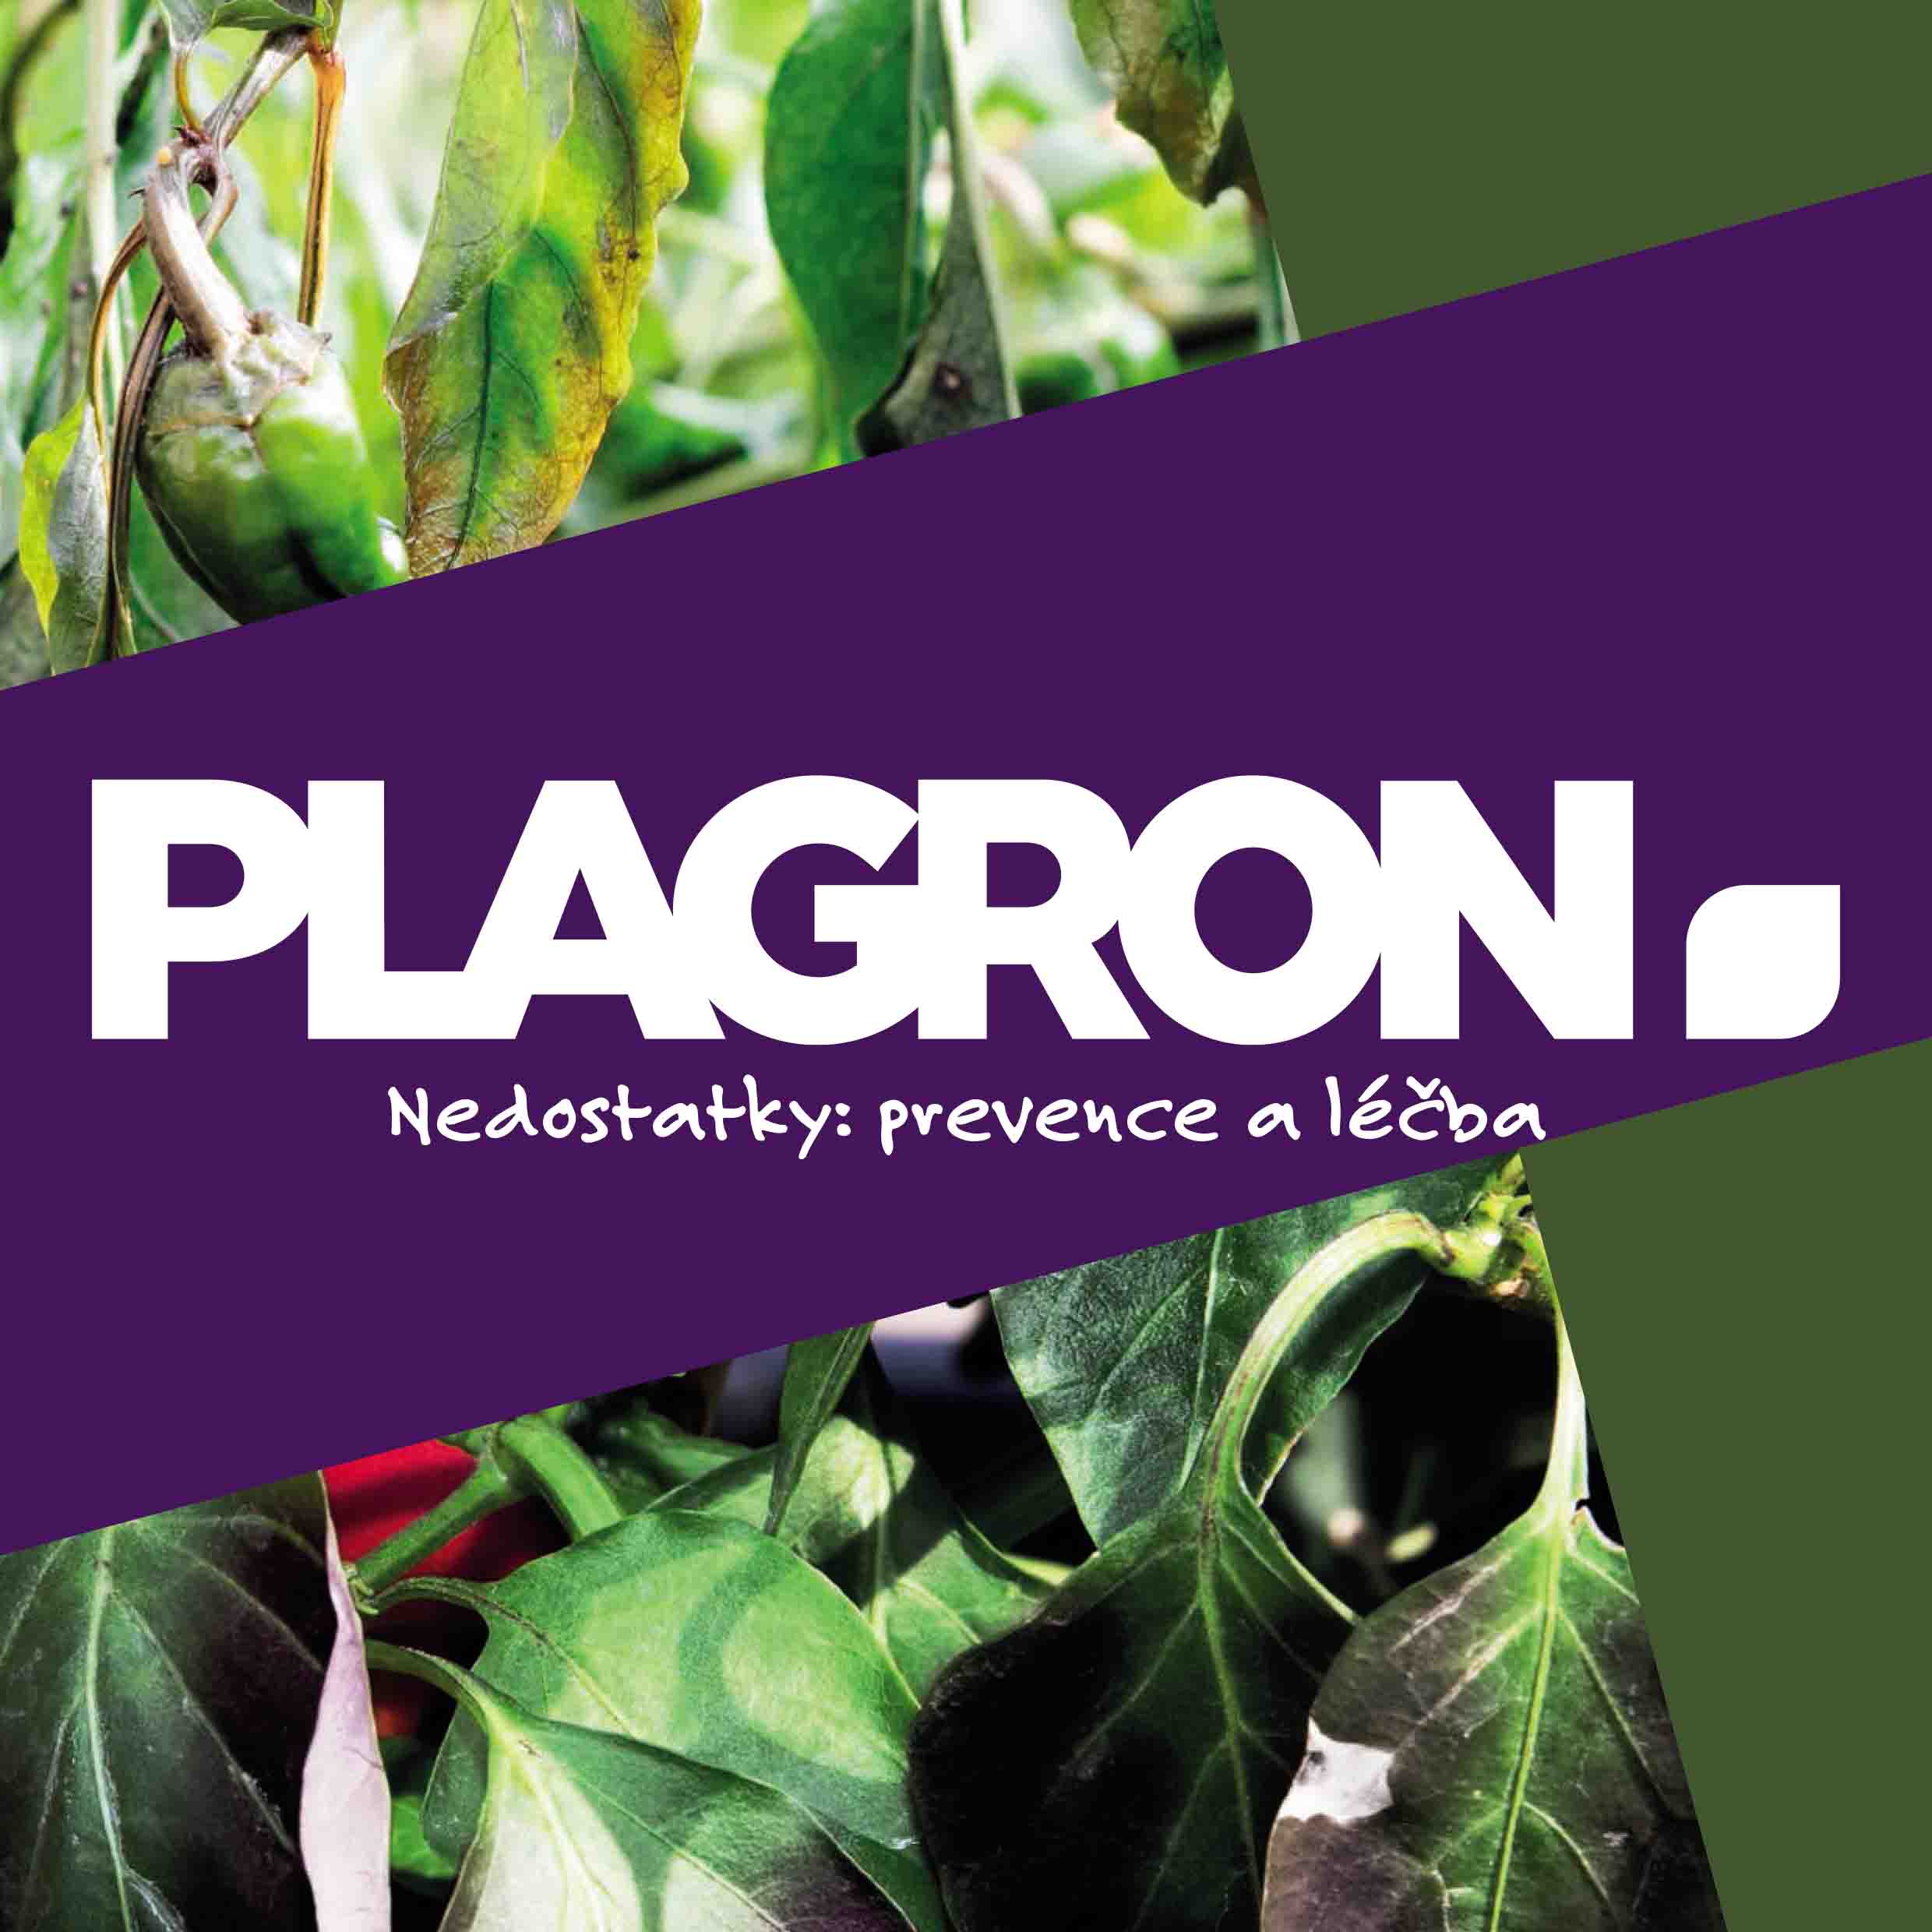 plagron 01